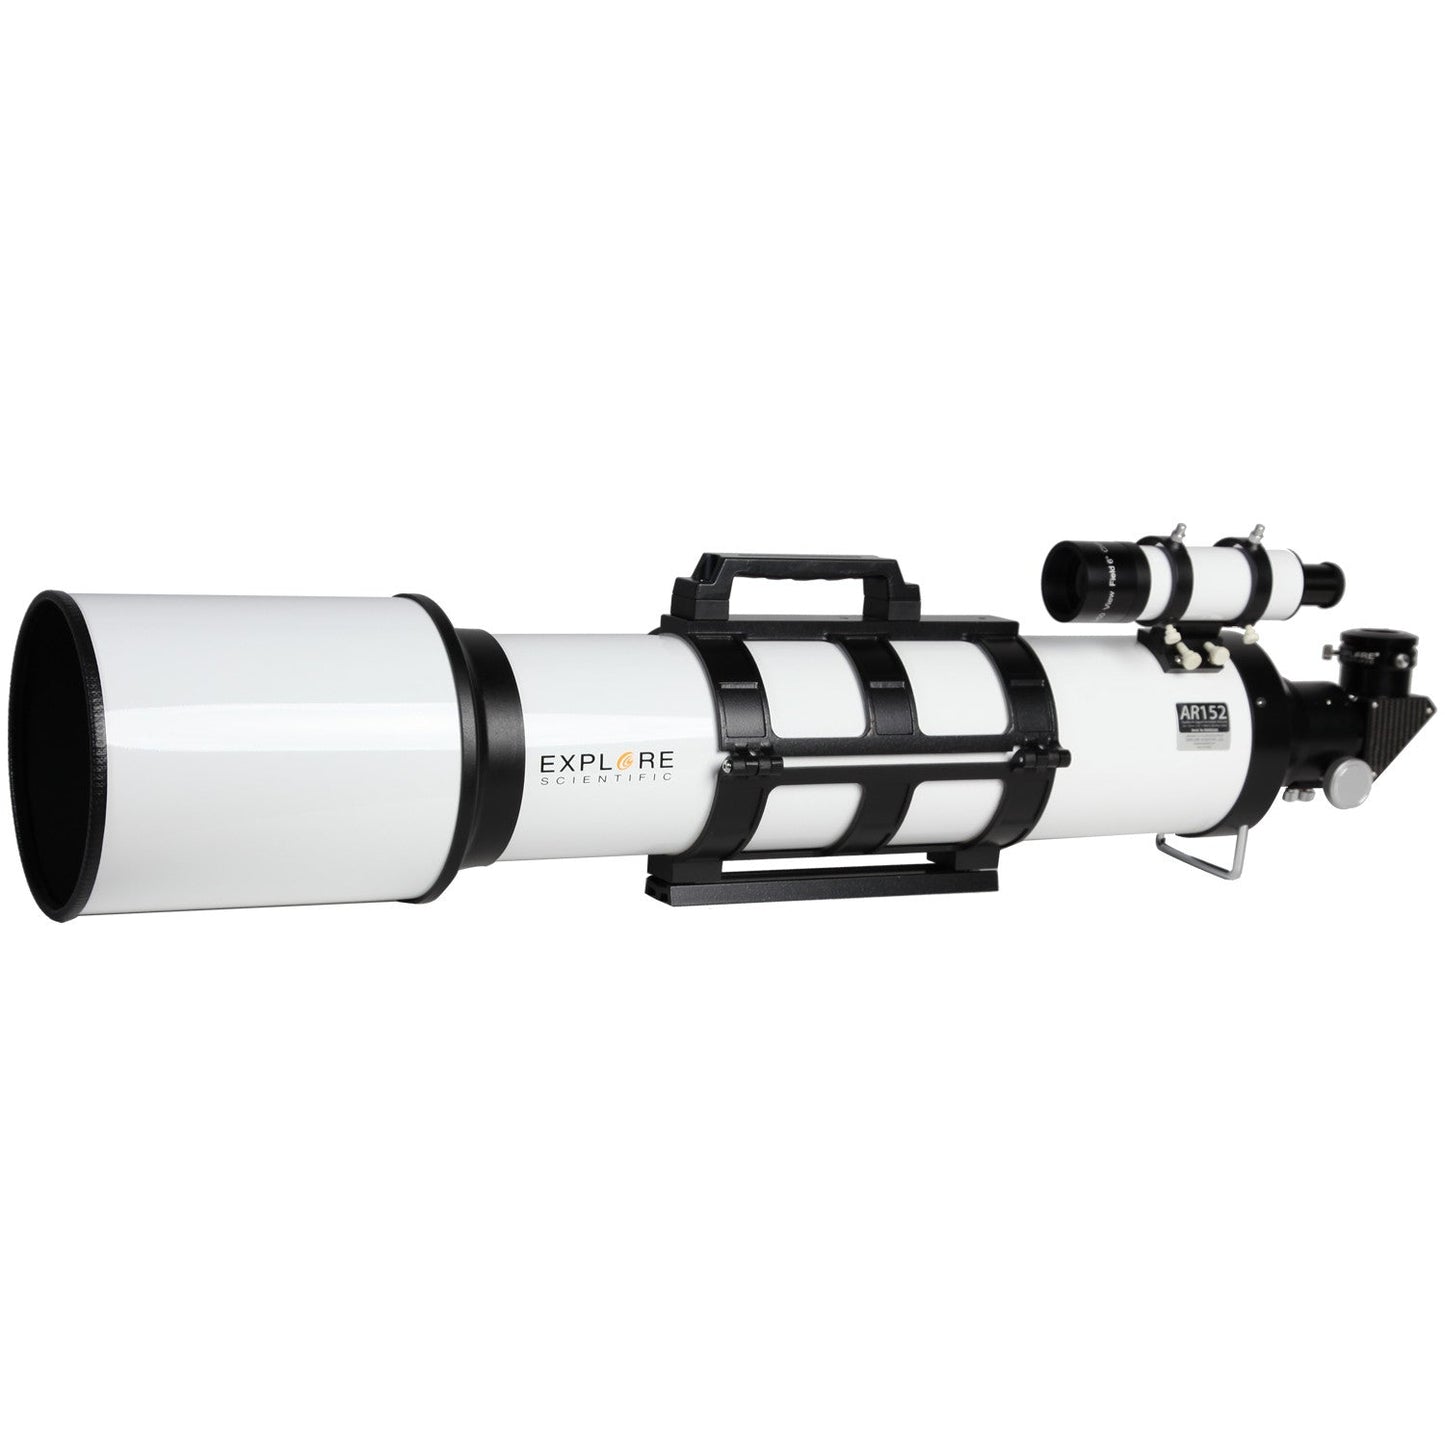 Explore Scientific AR152 Air-Spaced Doublet Refractor Telescope - DAR152065-01